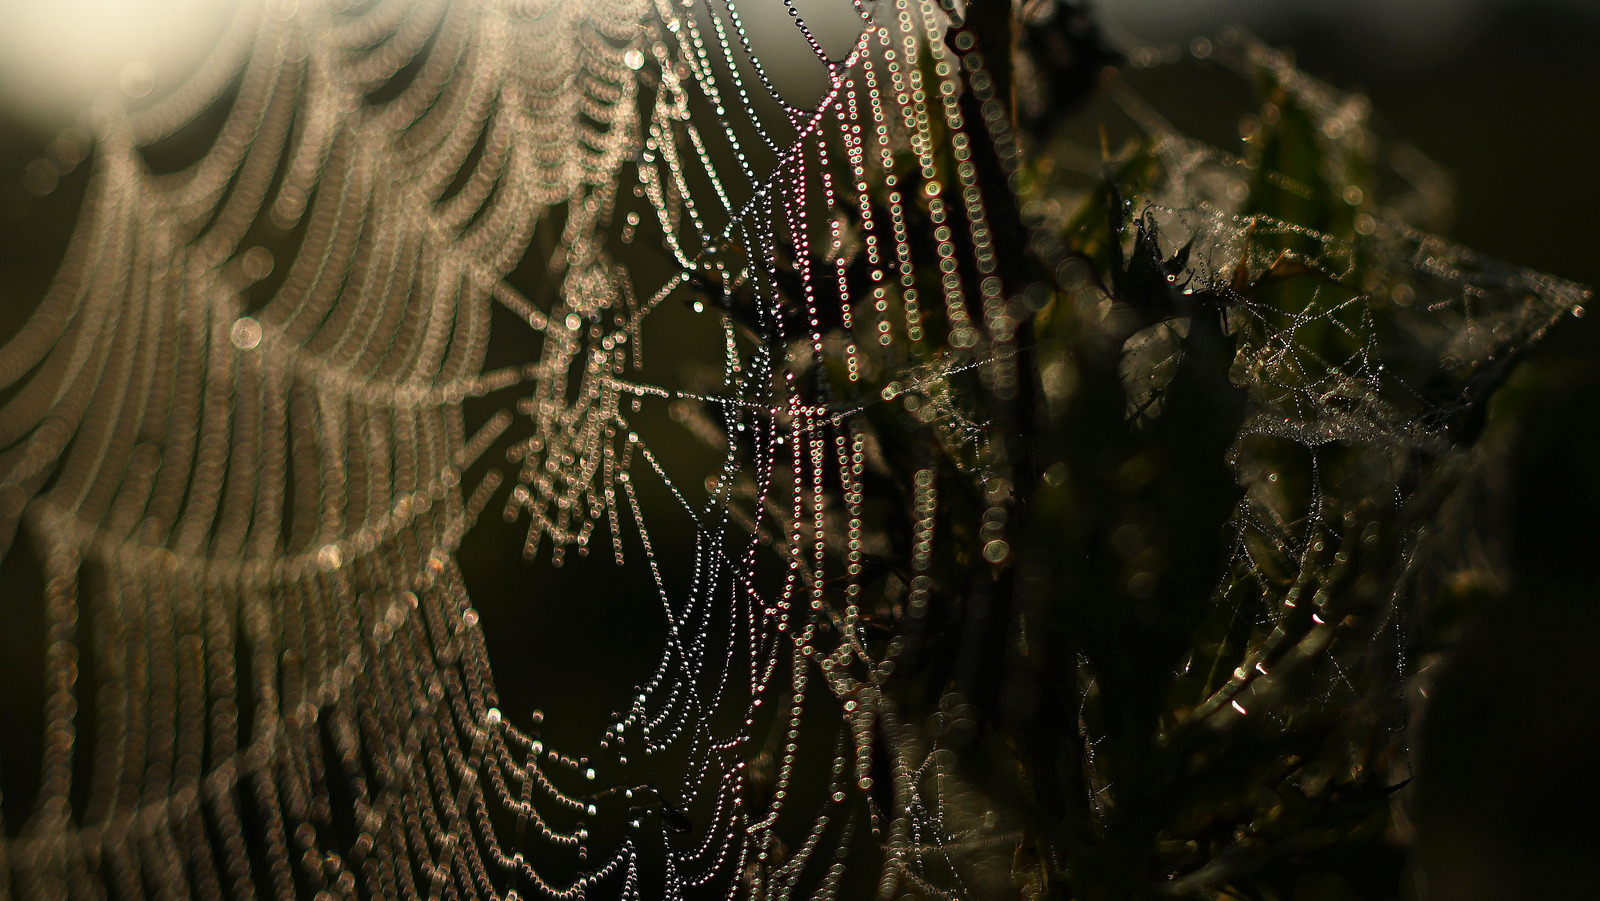 Spiderwebs and spider silk, explained, spider web 